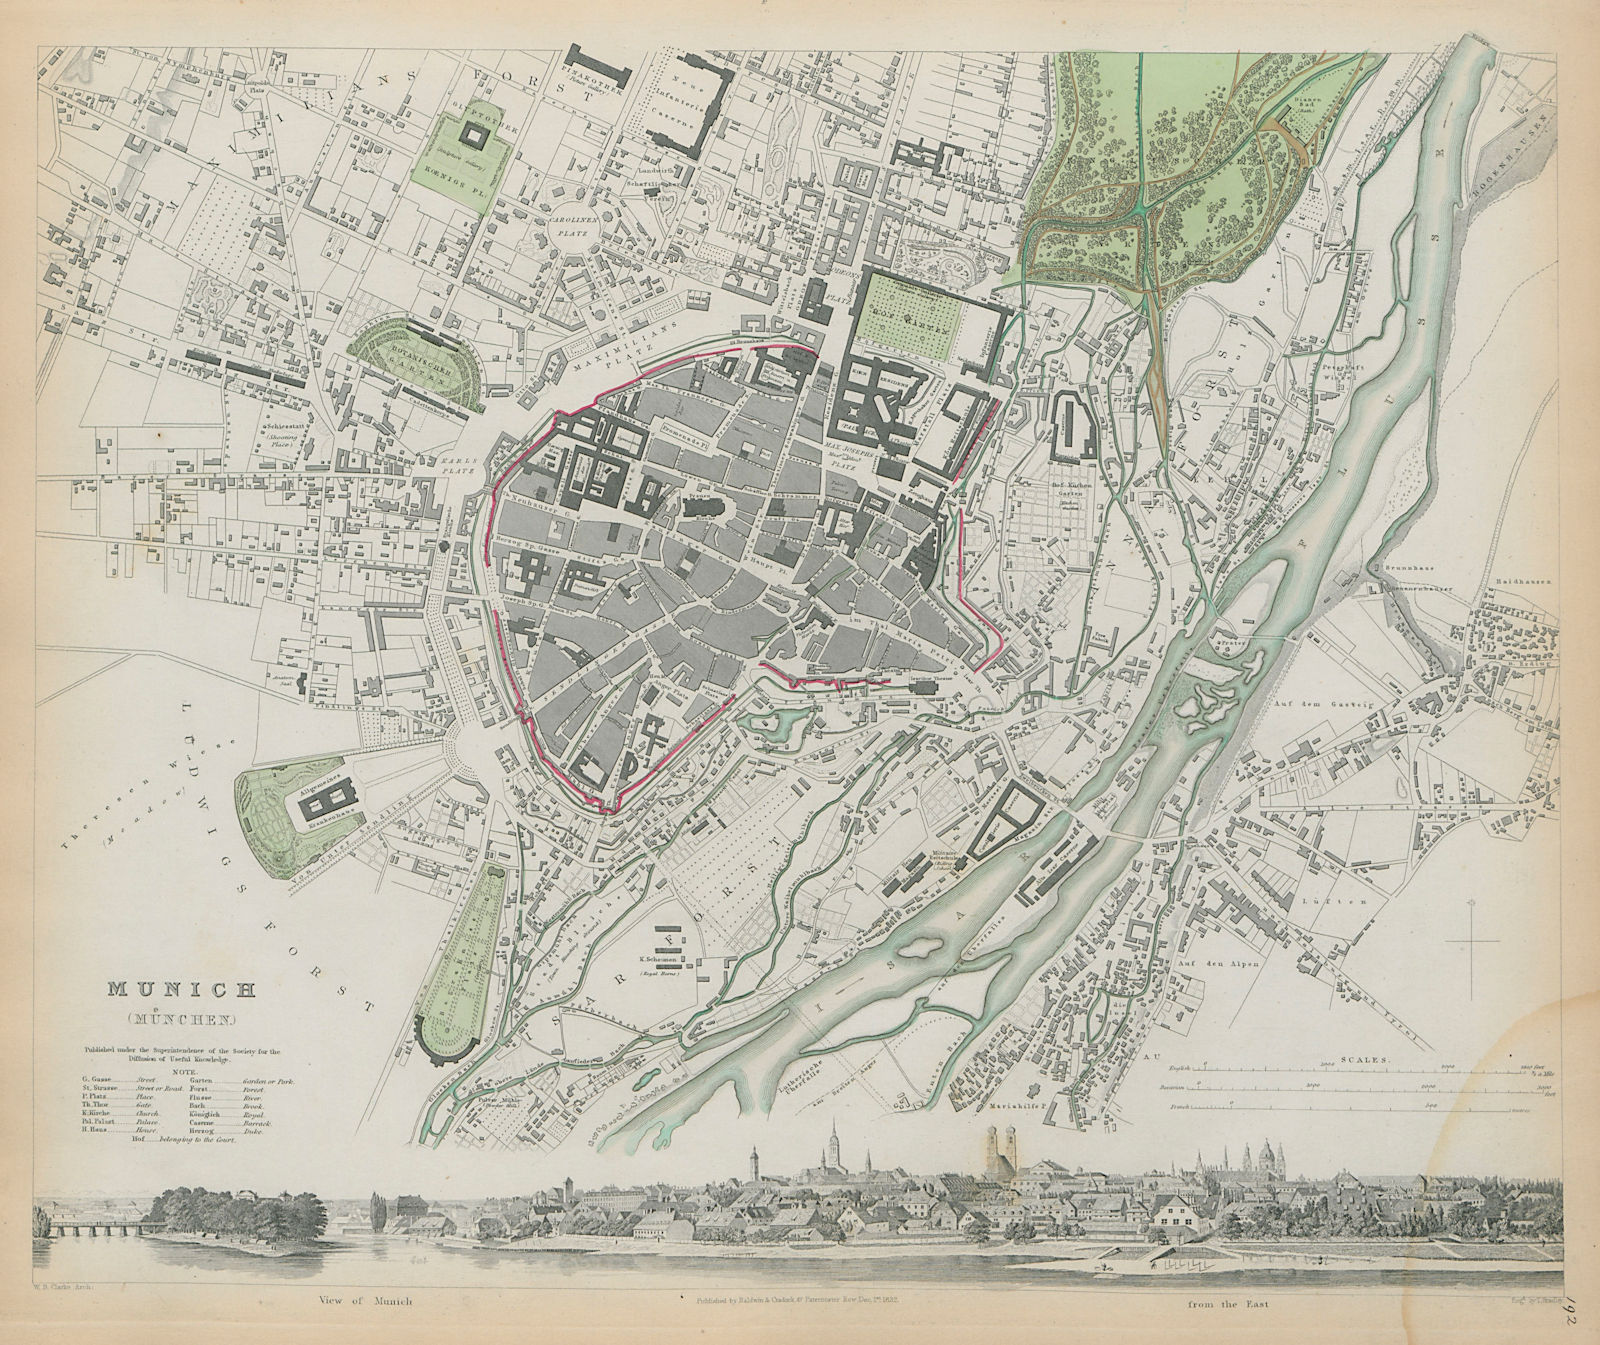 Associate Product MUNICH MÜNCHEN MUNCHEN Antique city town map plan & panorama SDUK 1844 old